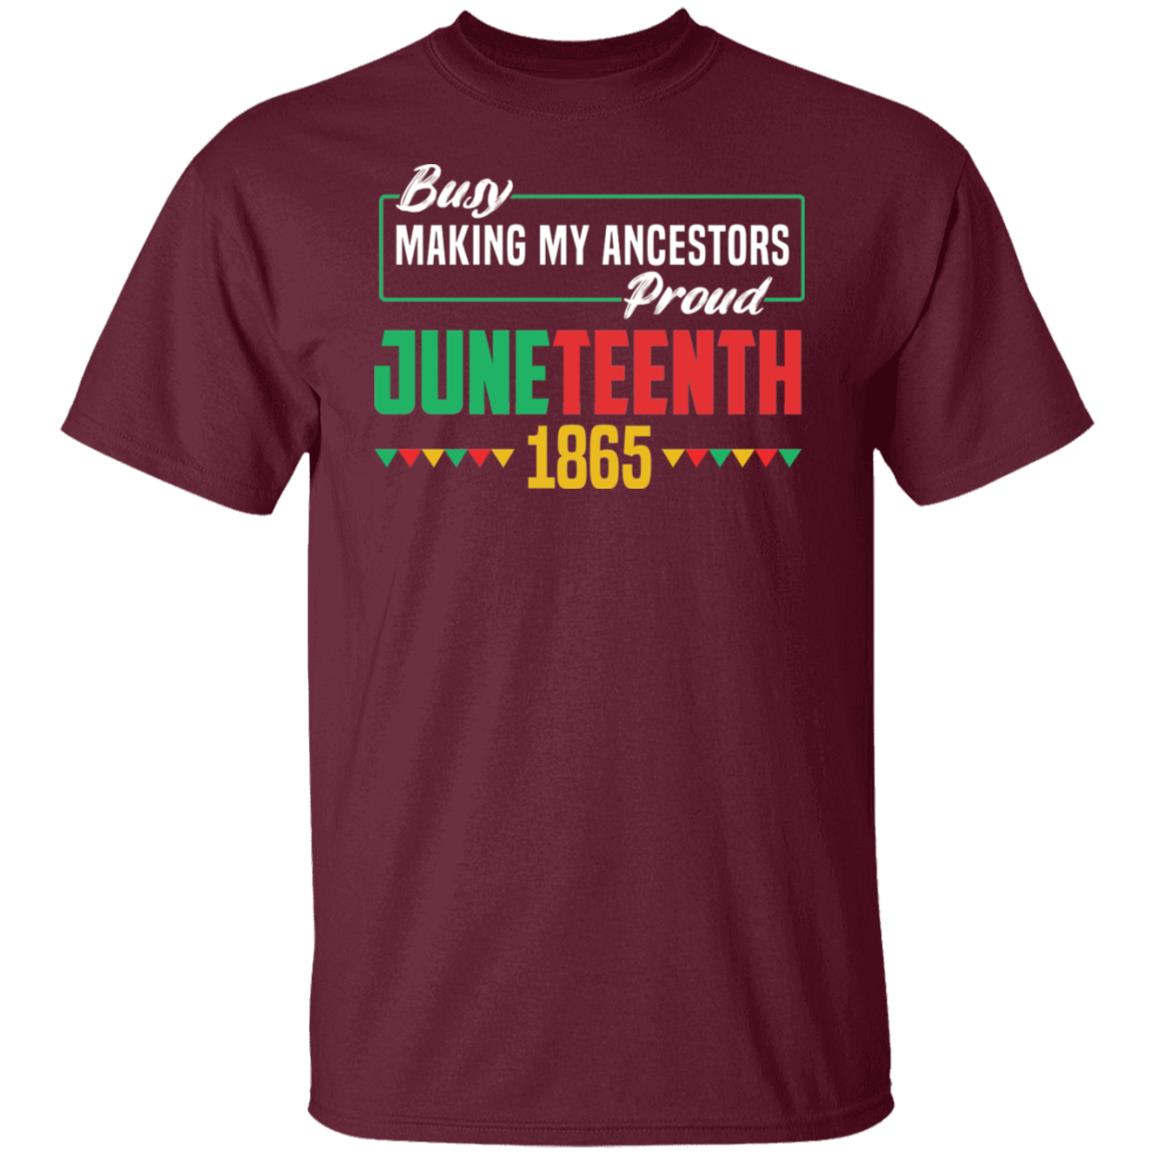 Busy Making My Ancestors Proud - Juneteenth T-shirt Apparel Gearment Unisex T-Shirt Maroon S